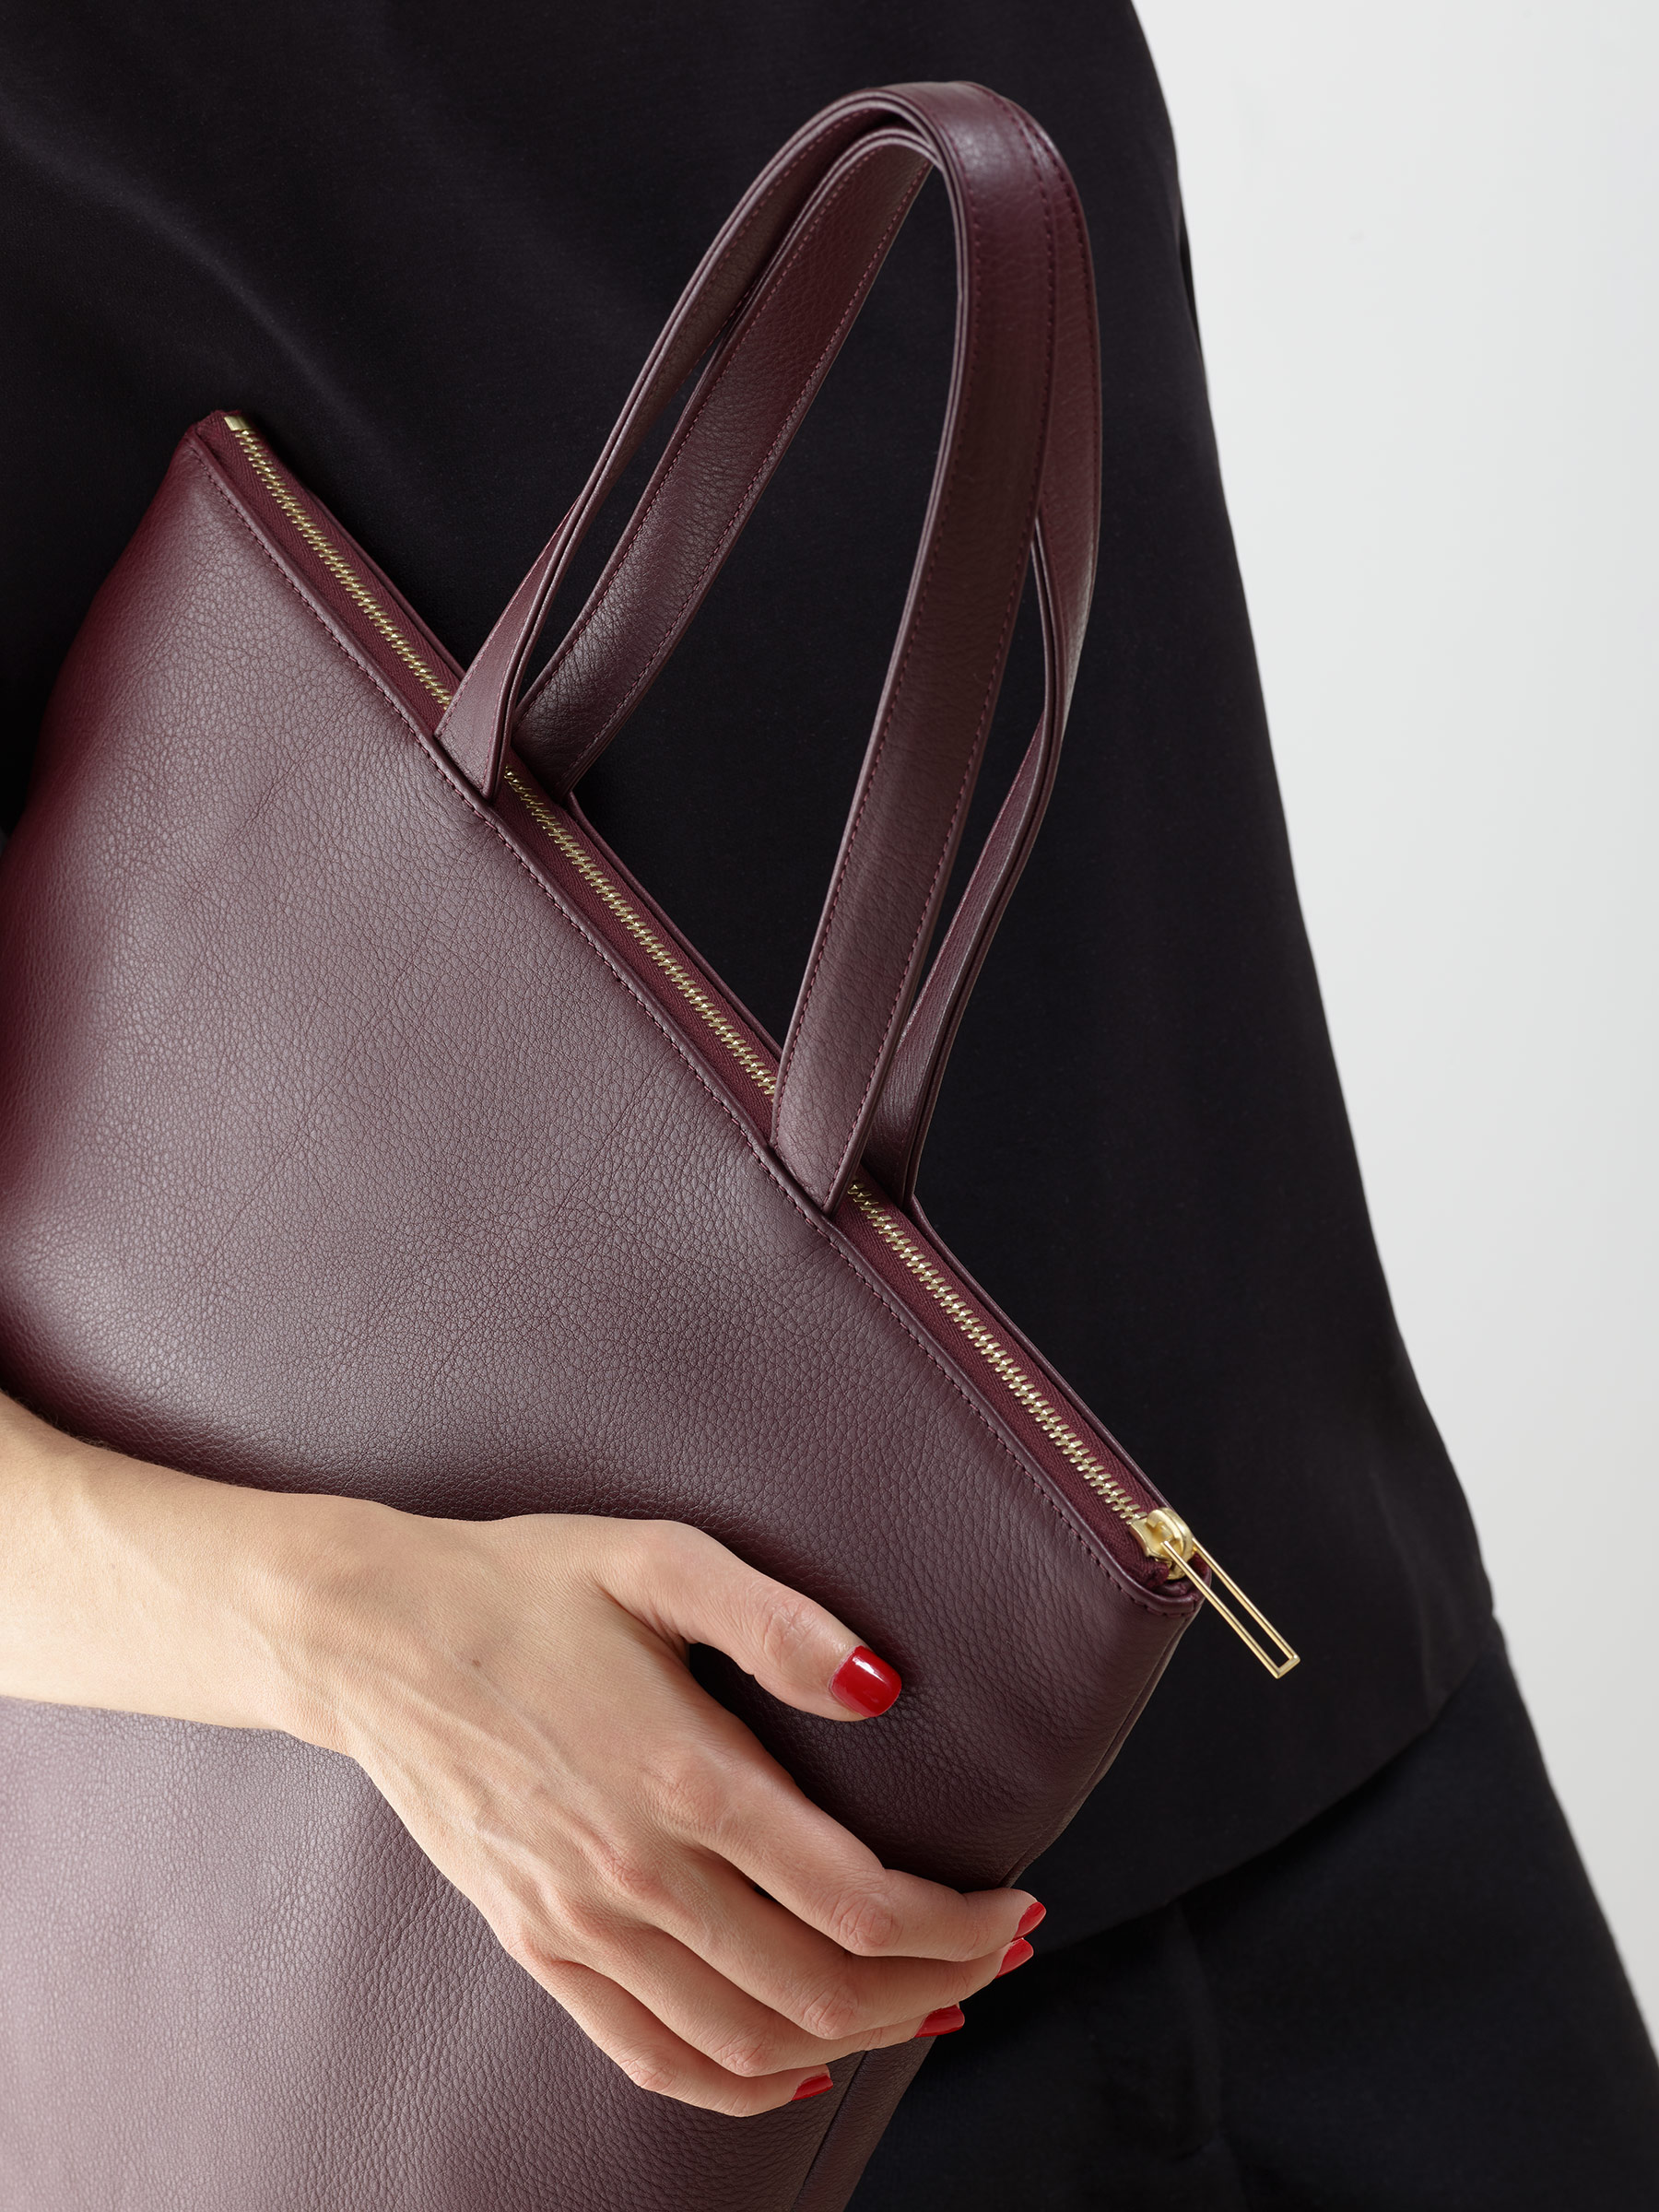 LUCID tote bag in burgundy calfskin leather